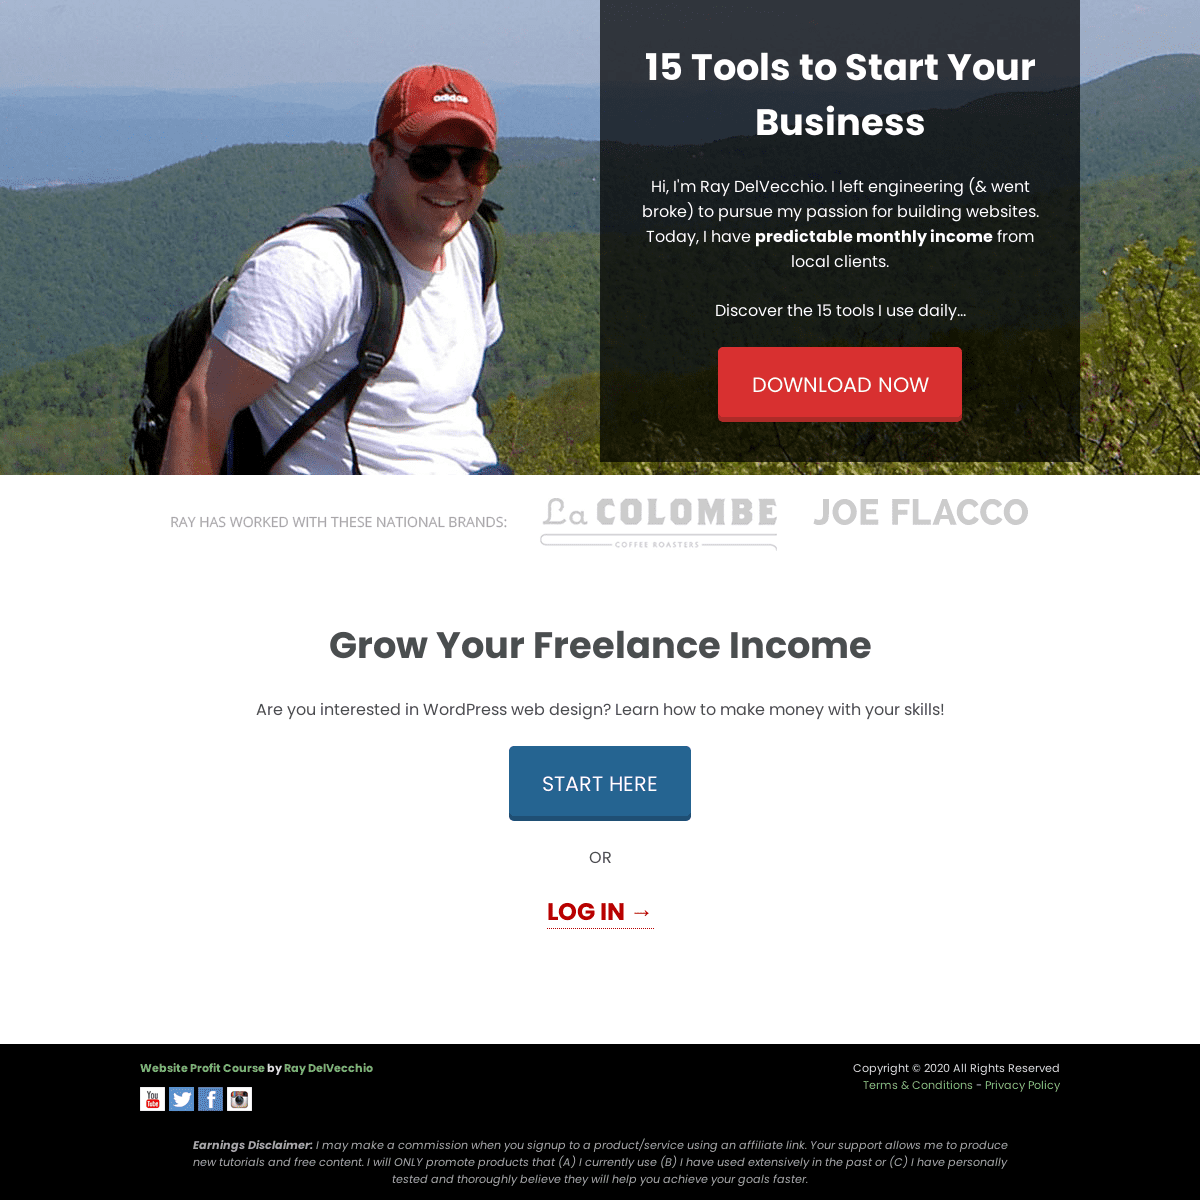 A complete backup of websiteprofitcourse.com